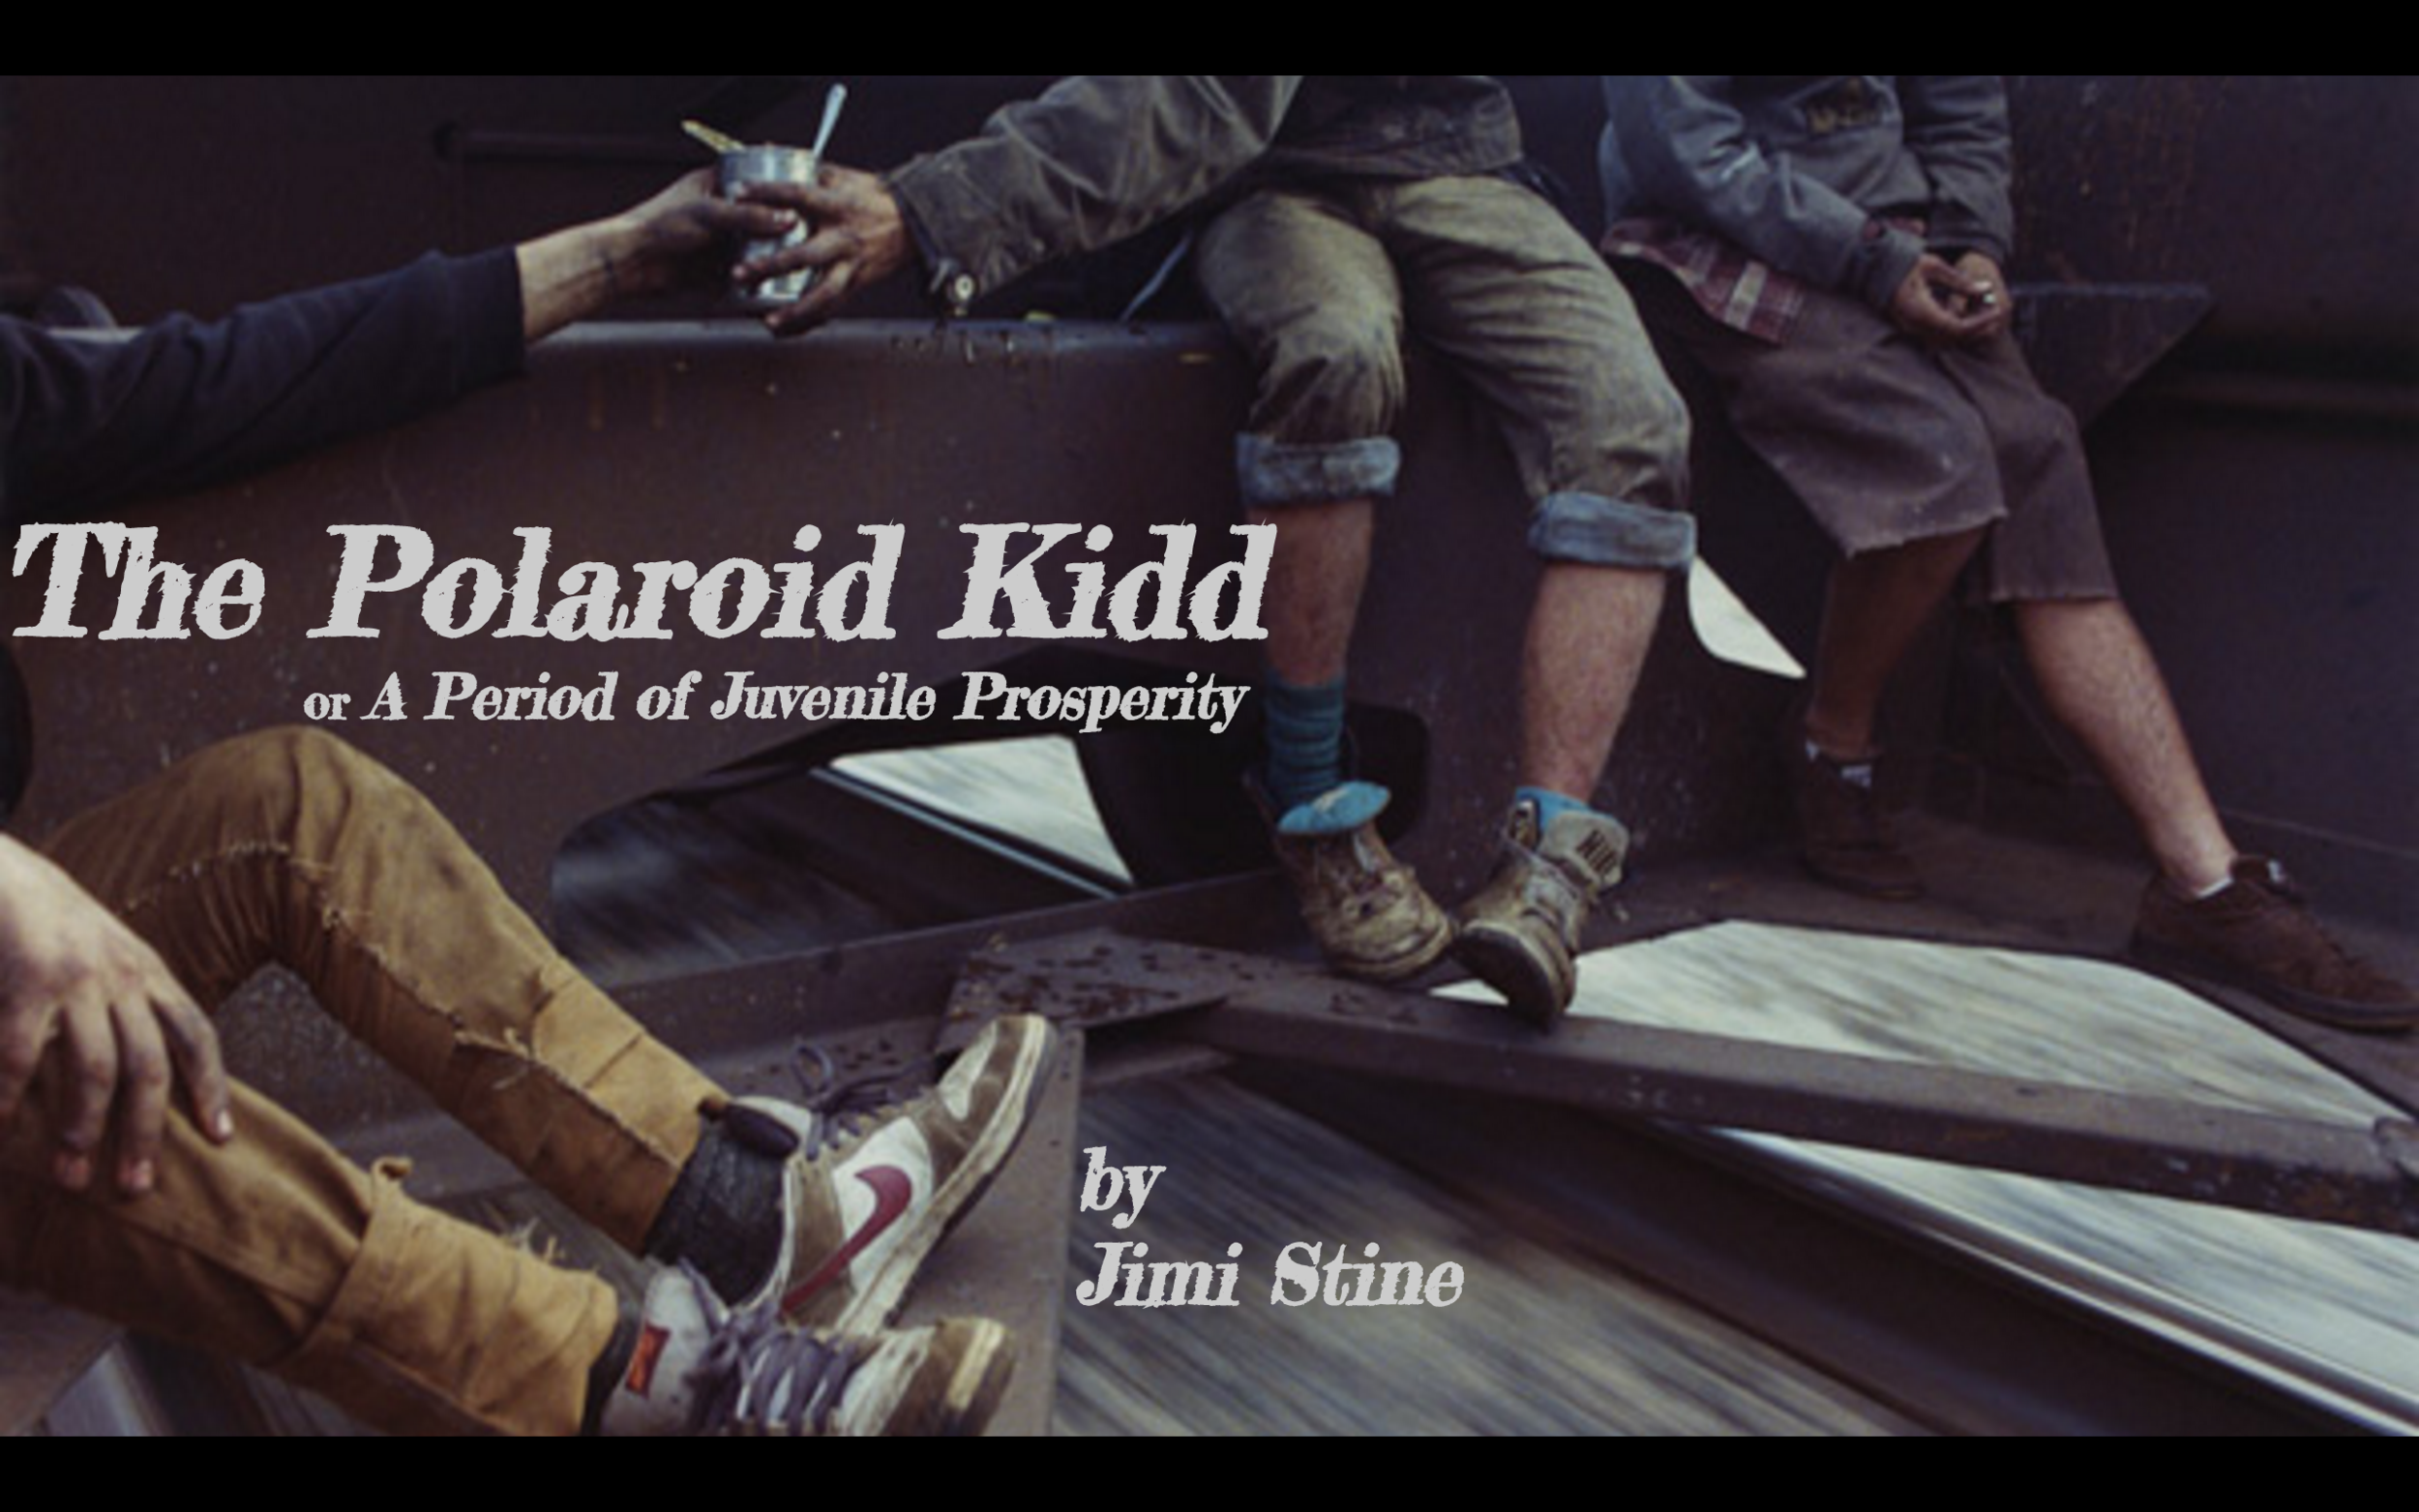 The Polaroid Kidd or A Period of Juvenile Prosperity